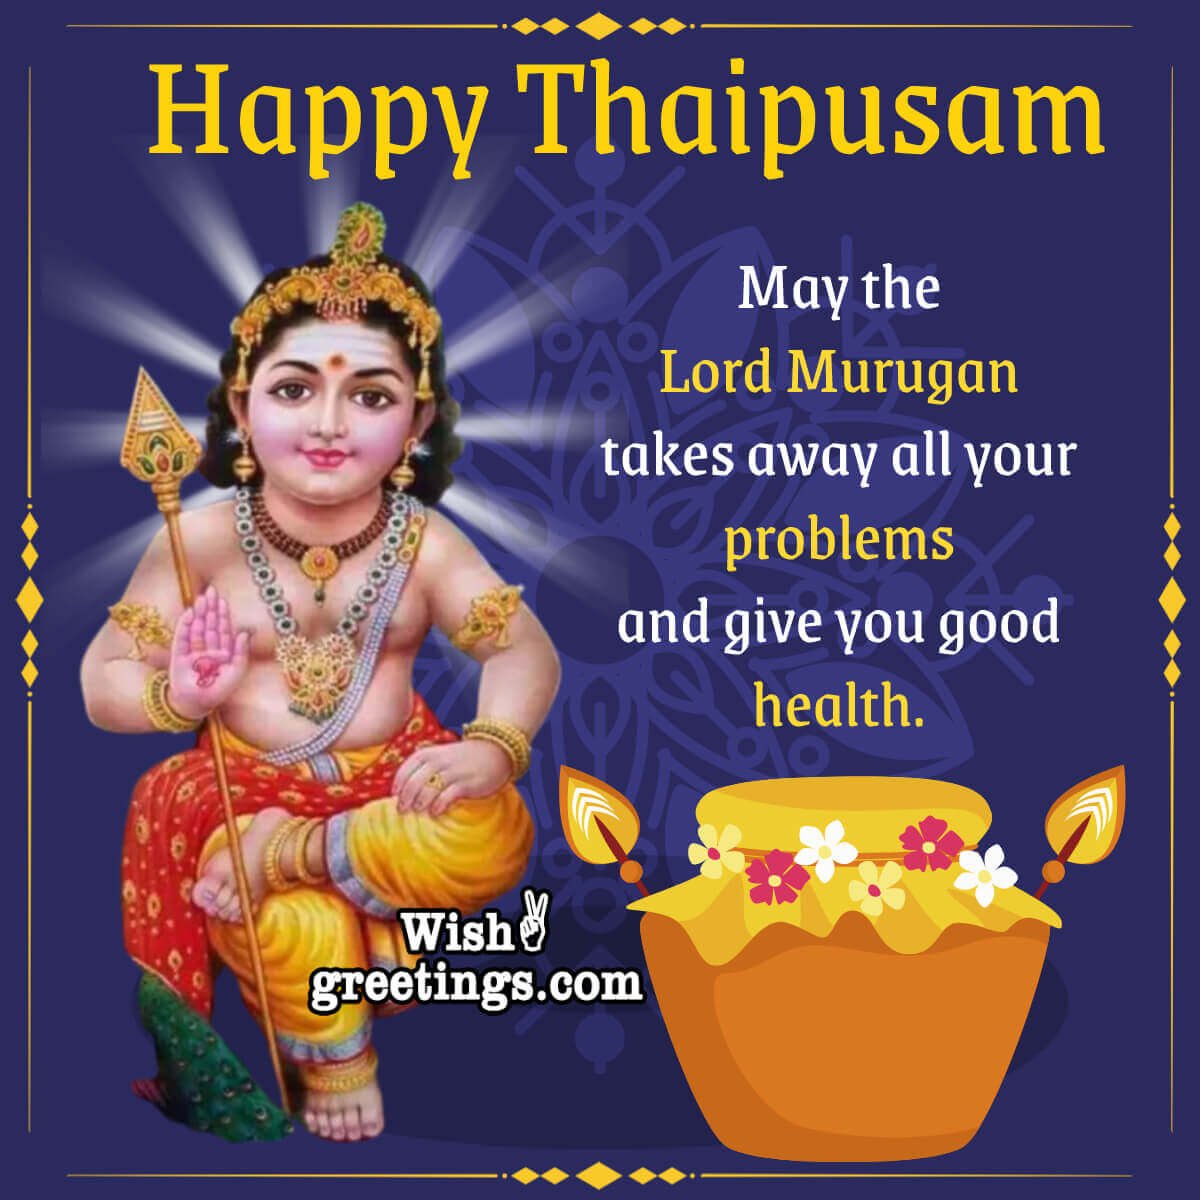 Happy Thaipusam Greeting Image